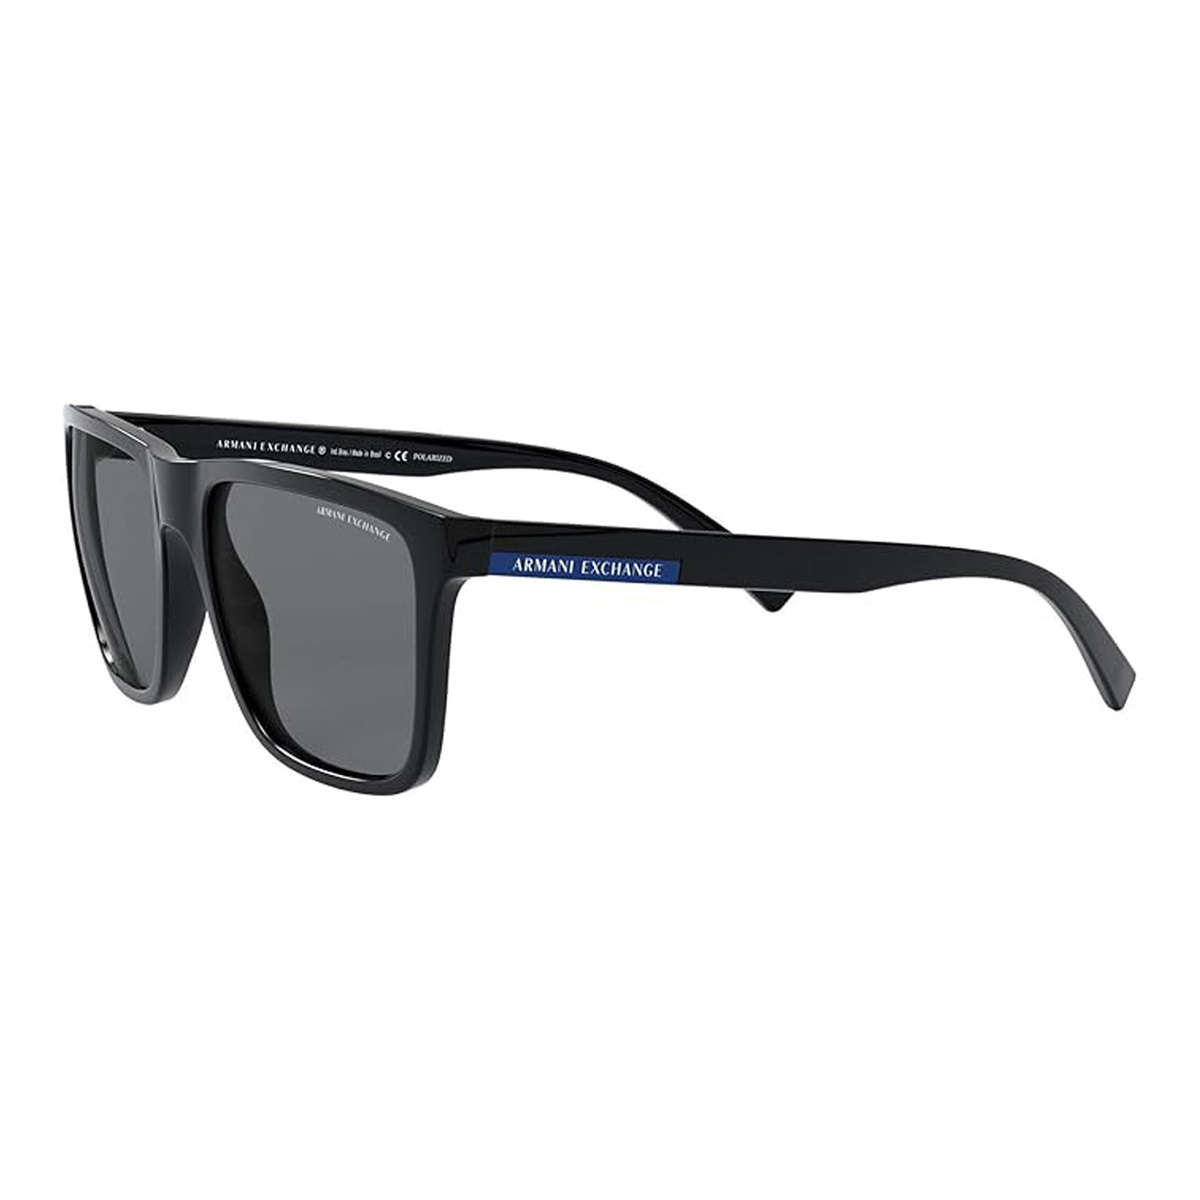 Armani Exchange Square Men's Sunglasses, Grey, 4080-81588157